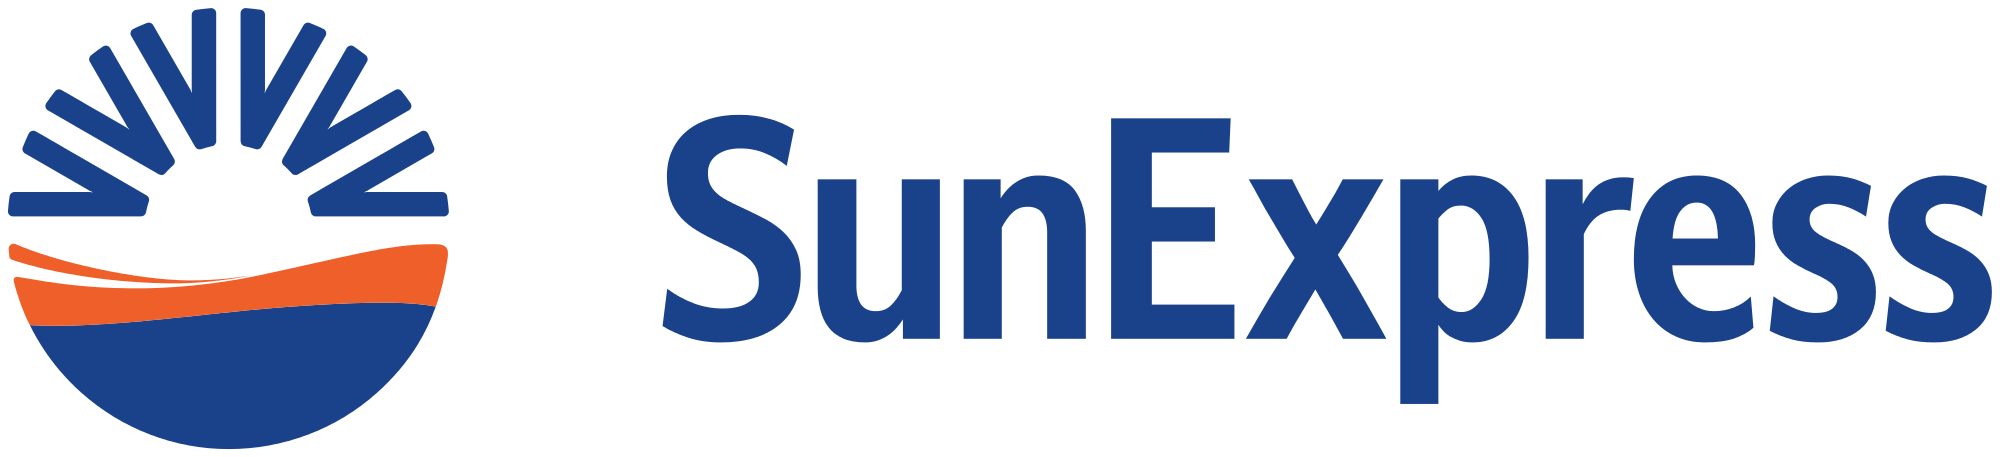 SunExpress-Logo